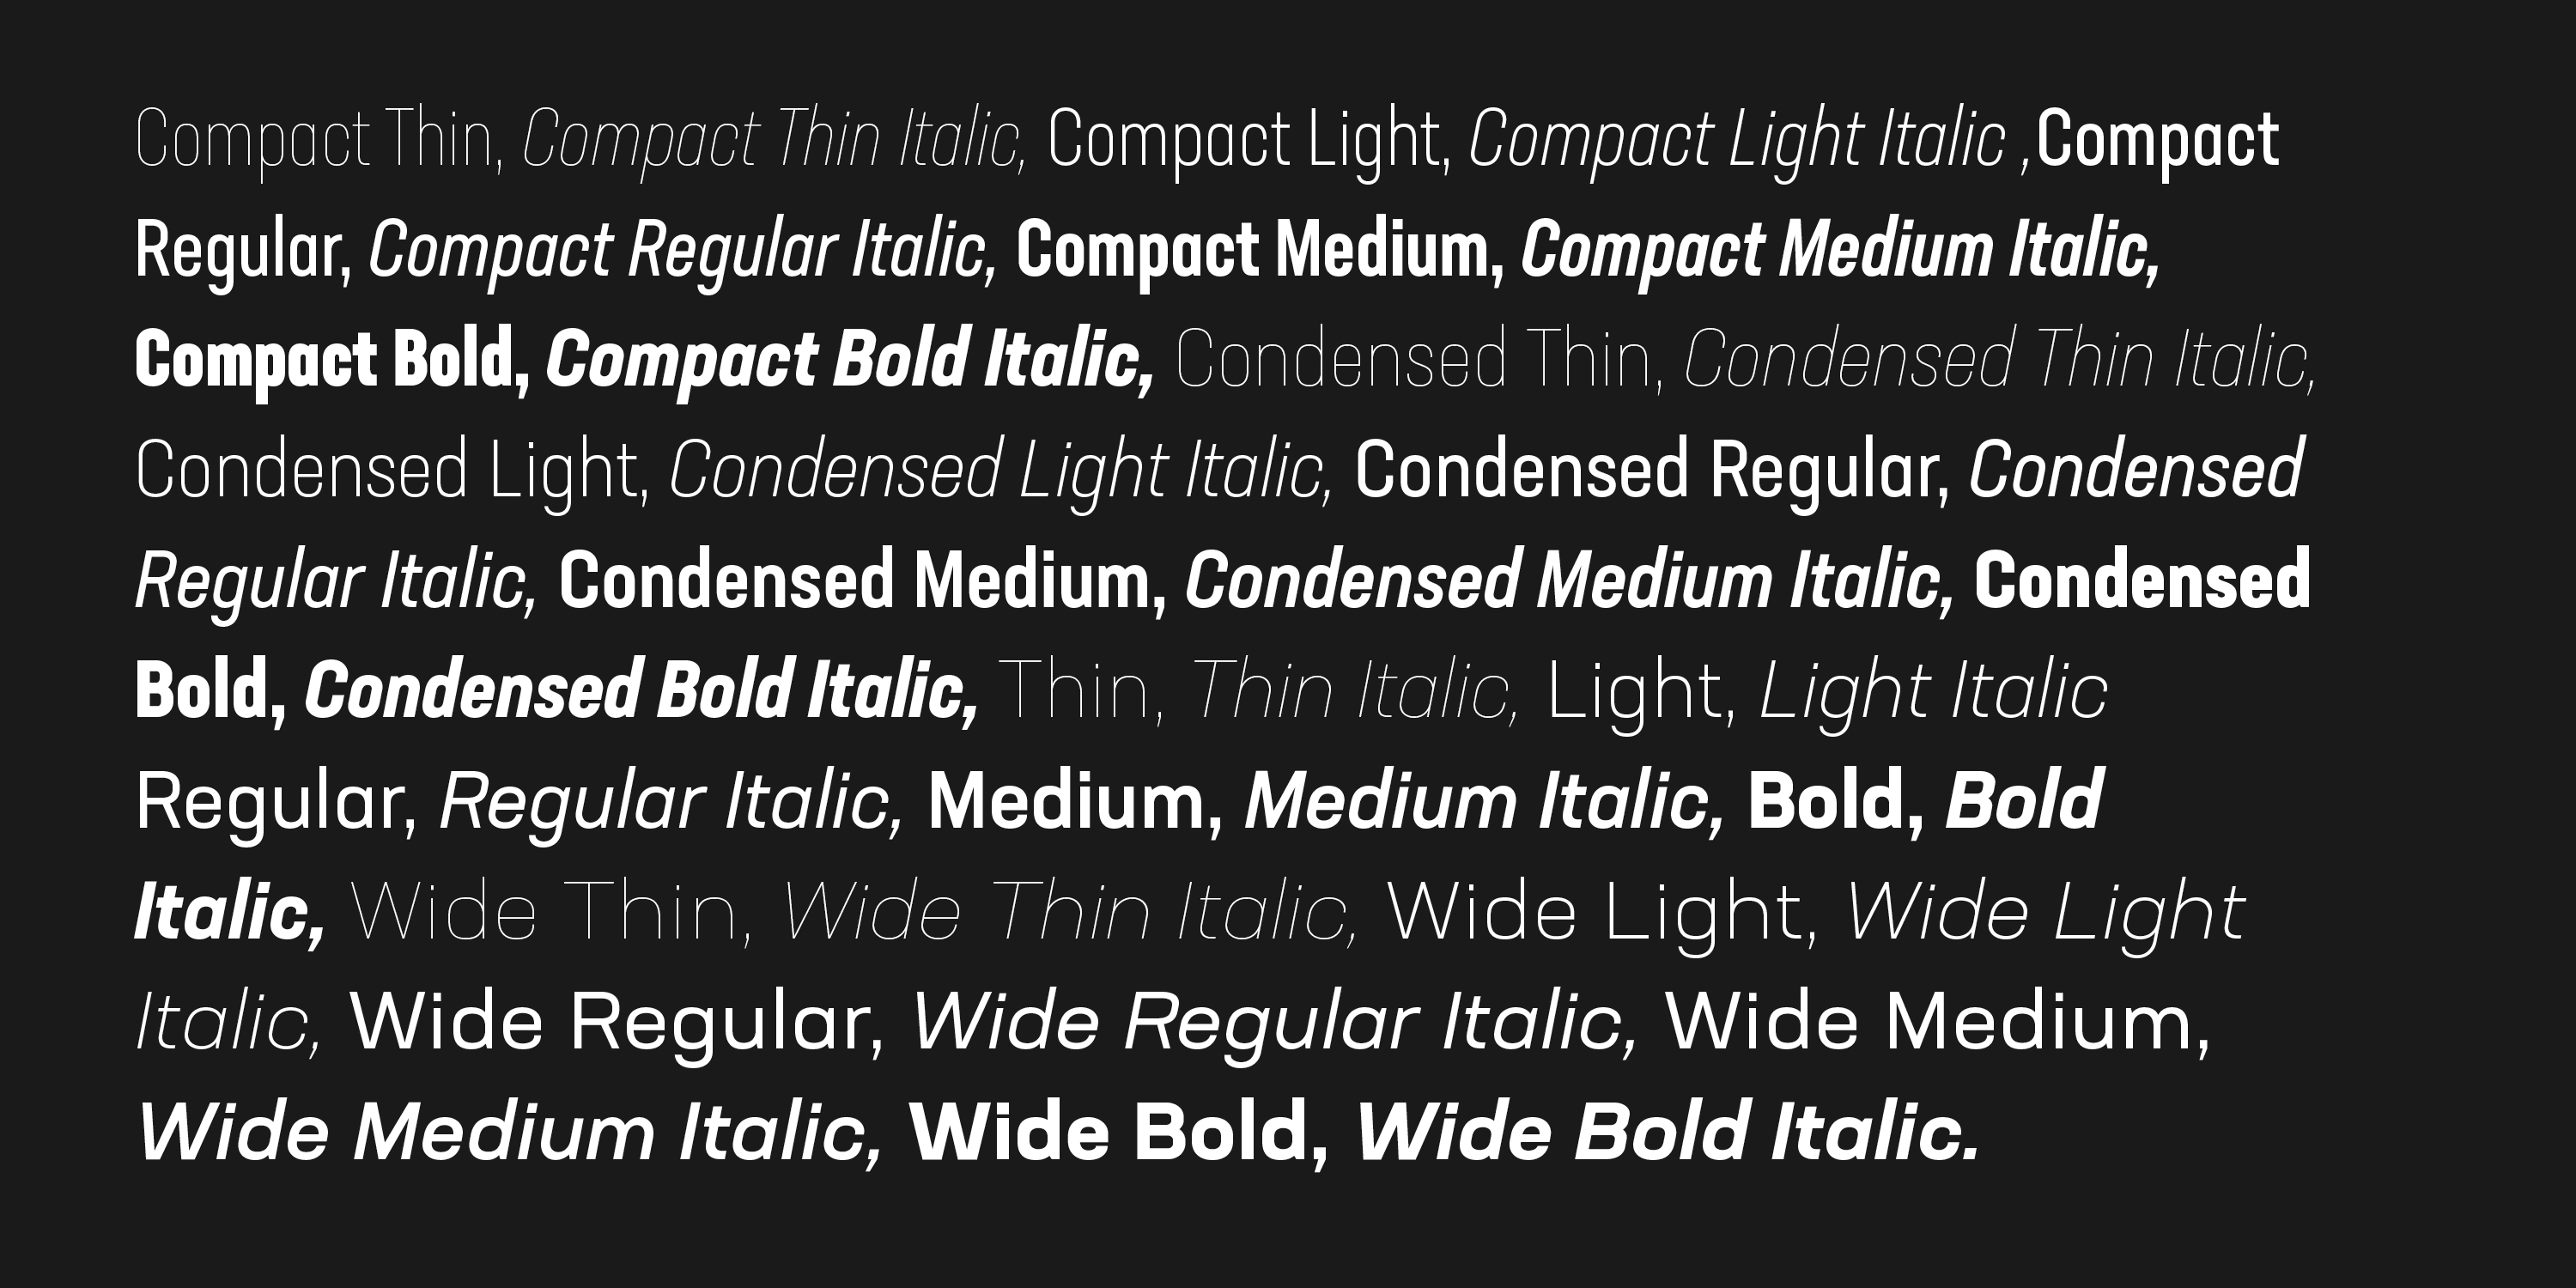 Neusa Next Pro Wide Medium Font preview